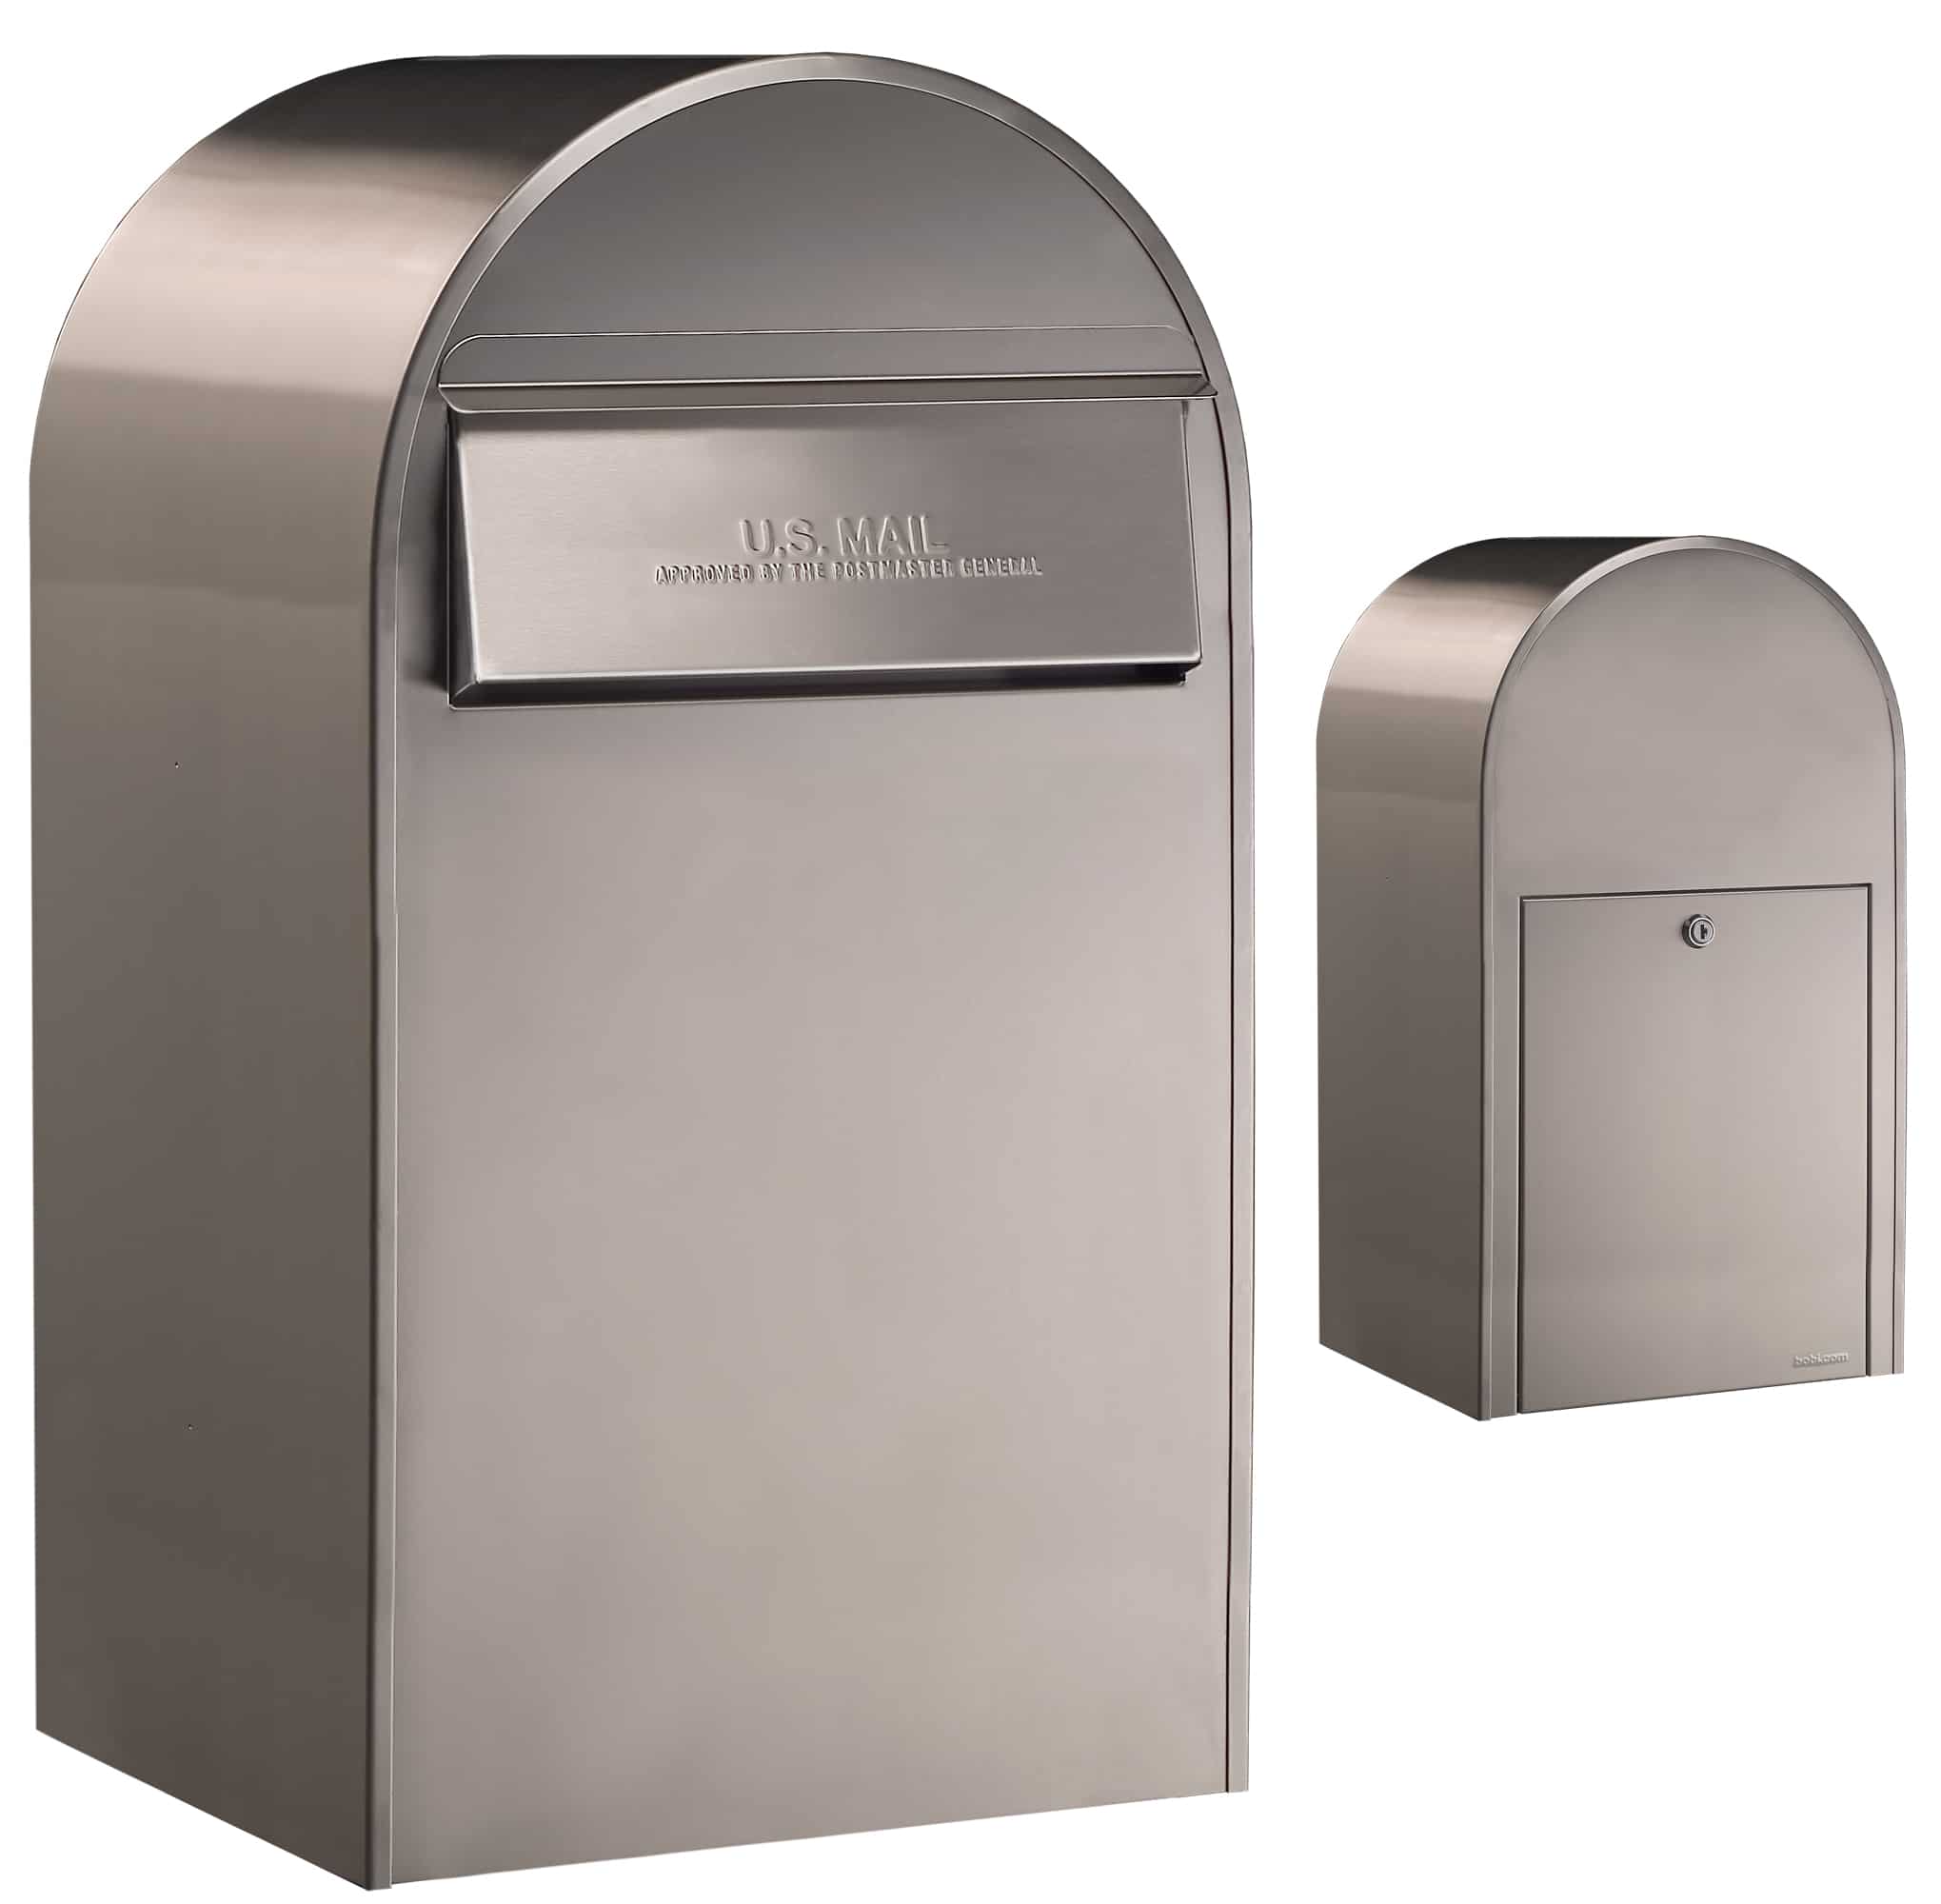 SALE! – Bobi Grande Rear Access Mailbox Product Image